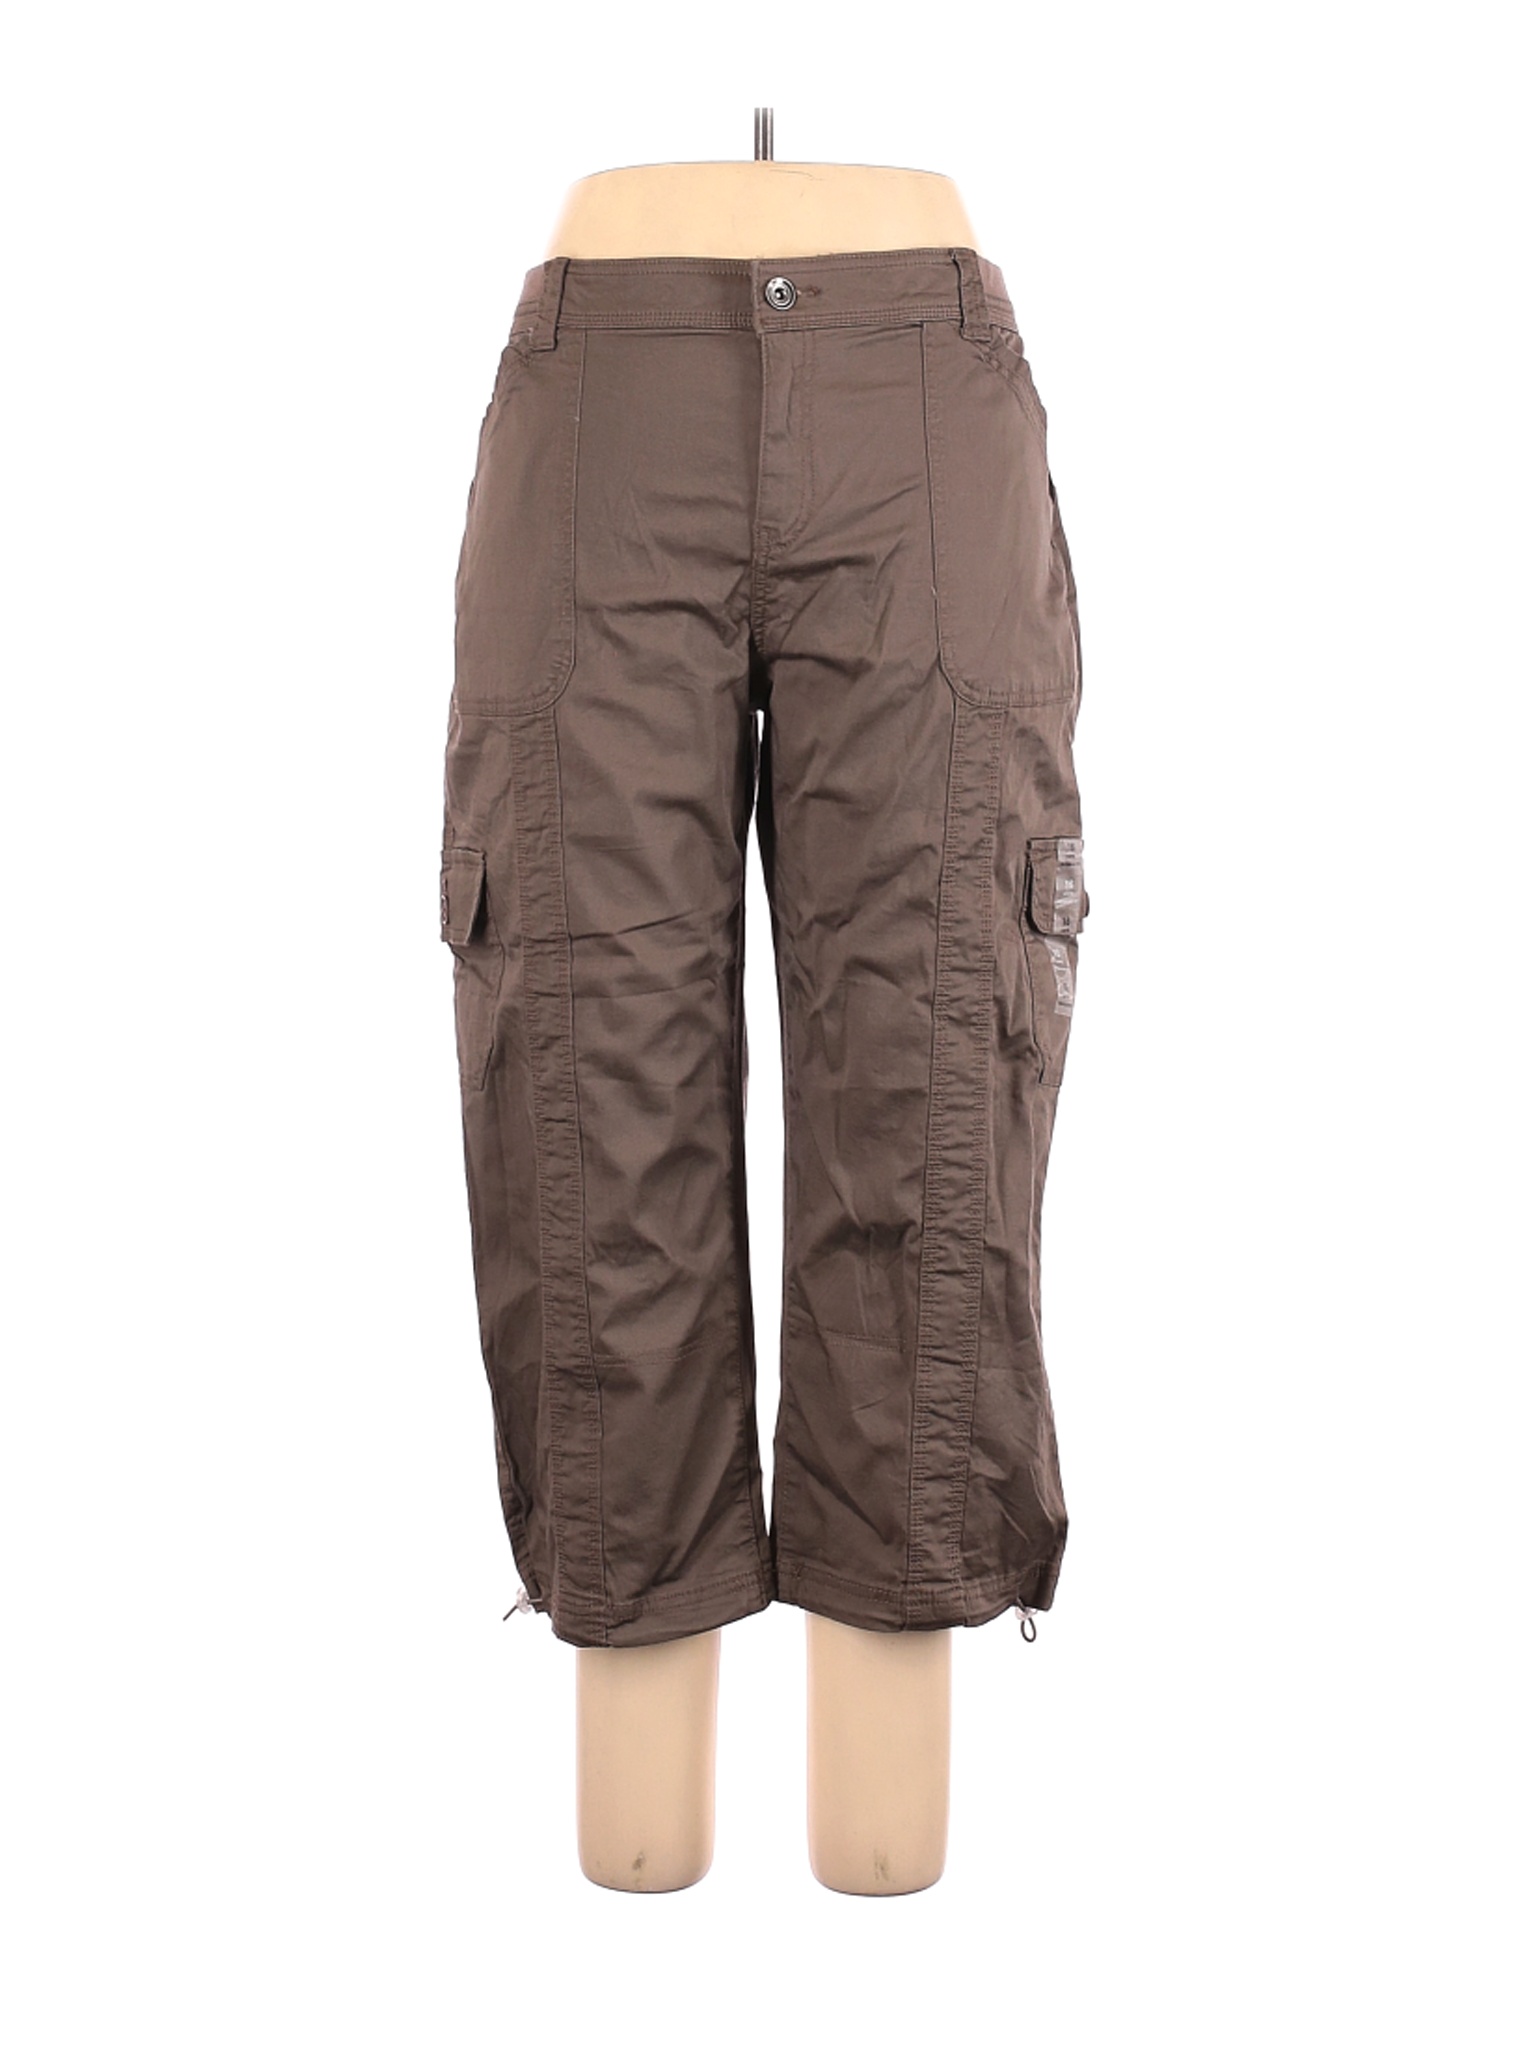 NWT Style&Co Women Brown Cargo Pants 16 | eBay